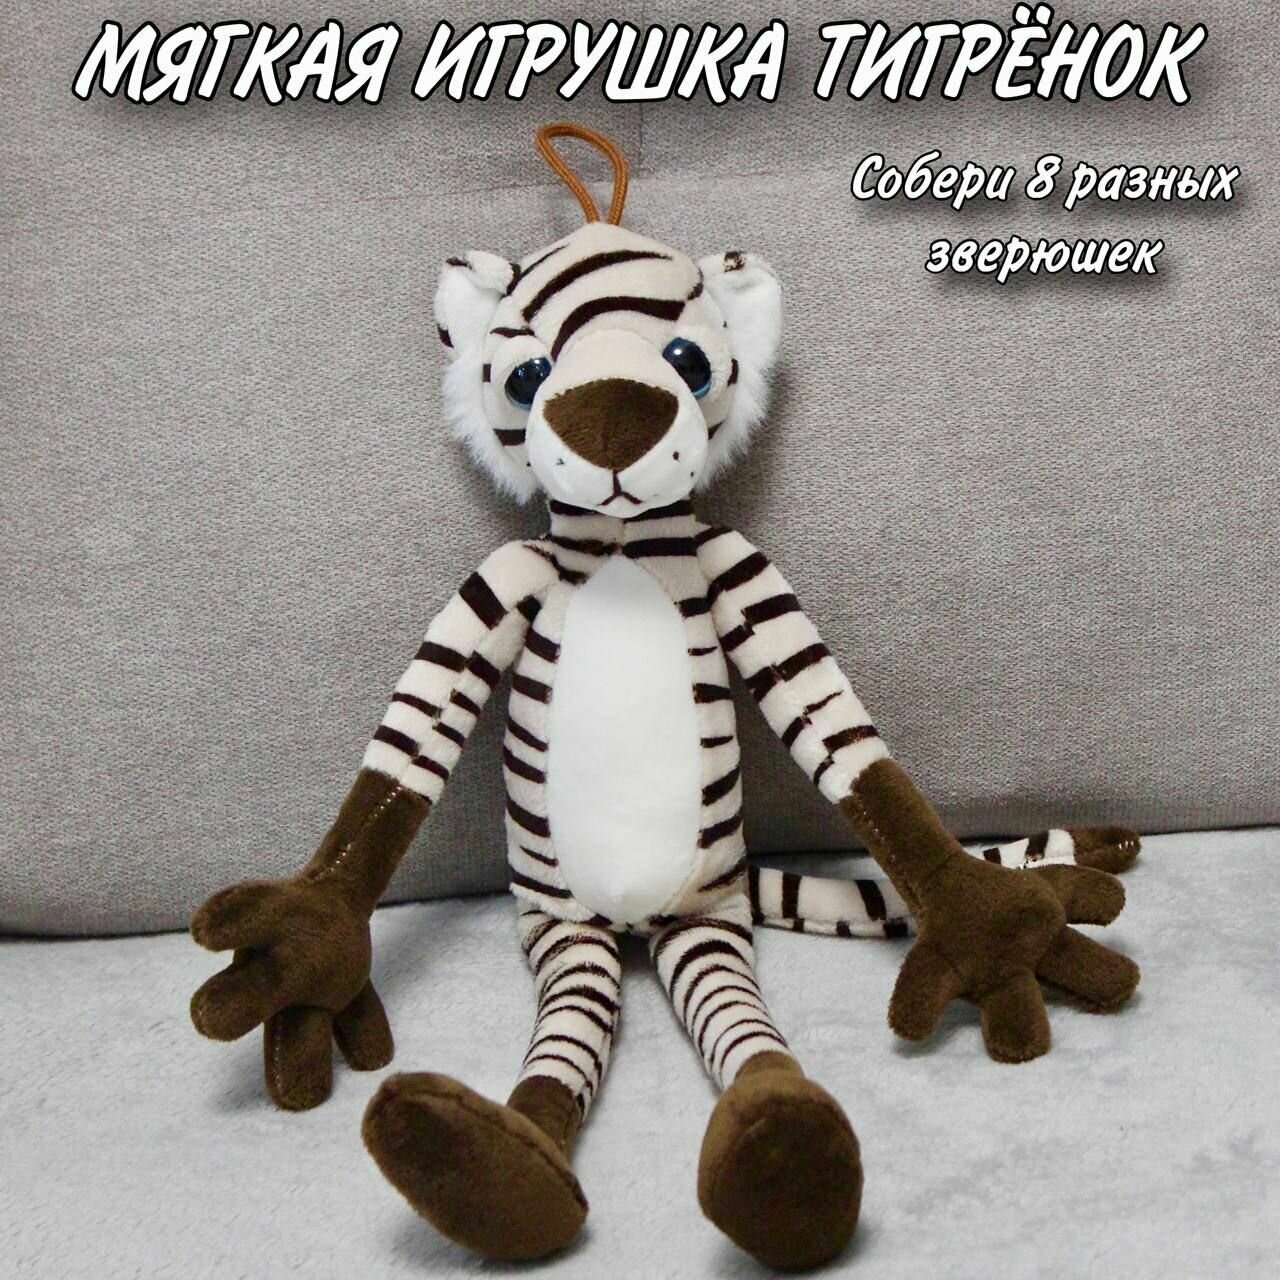 Мягкая игрушка Тигрёнок Leggy toys / Мягкий зоопарк